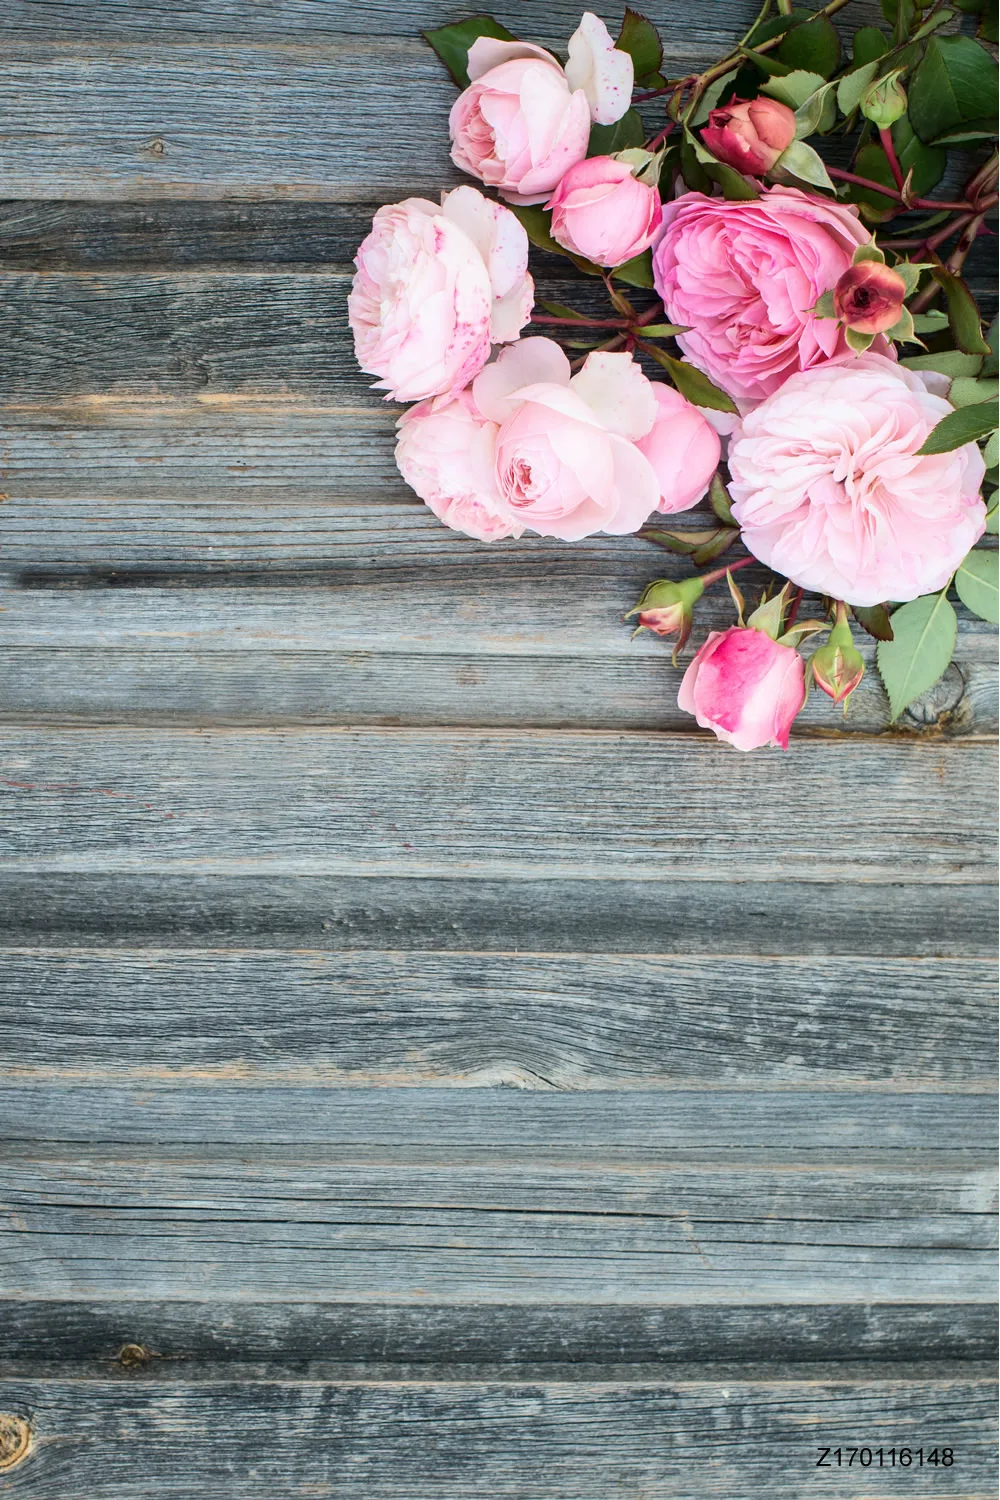 LIFE MAGIC BOX Silk Like Flowers Rose Background Wood Backdrop Wood